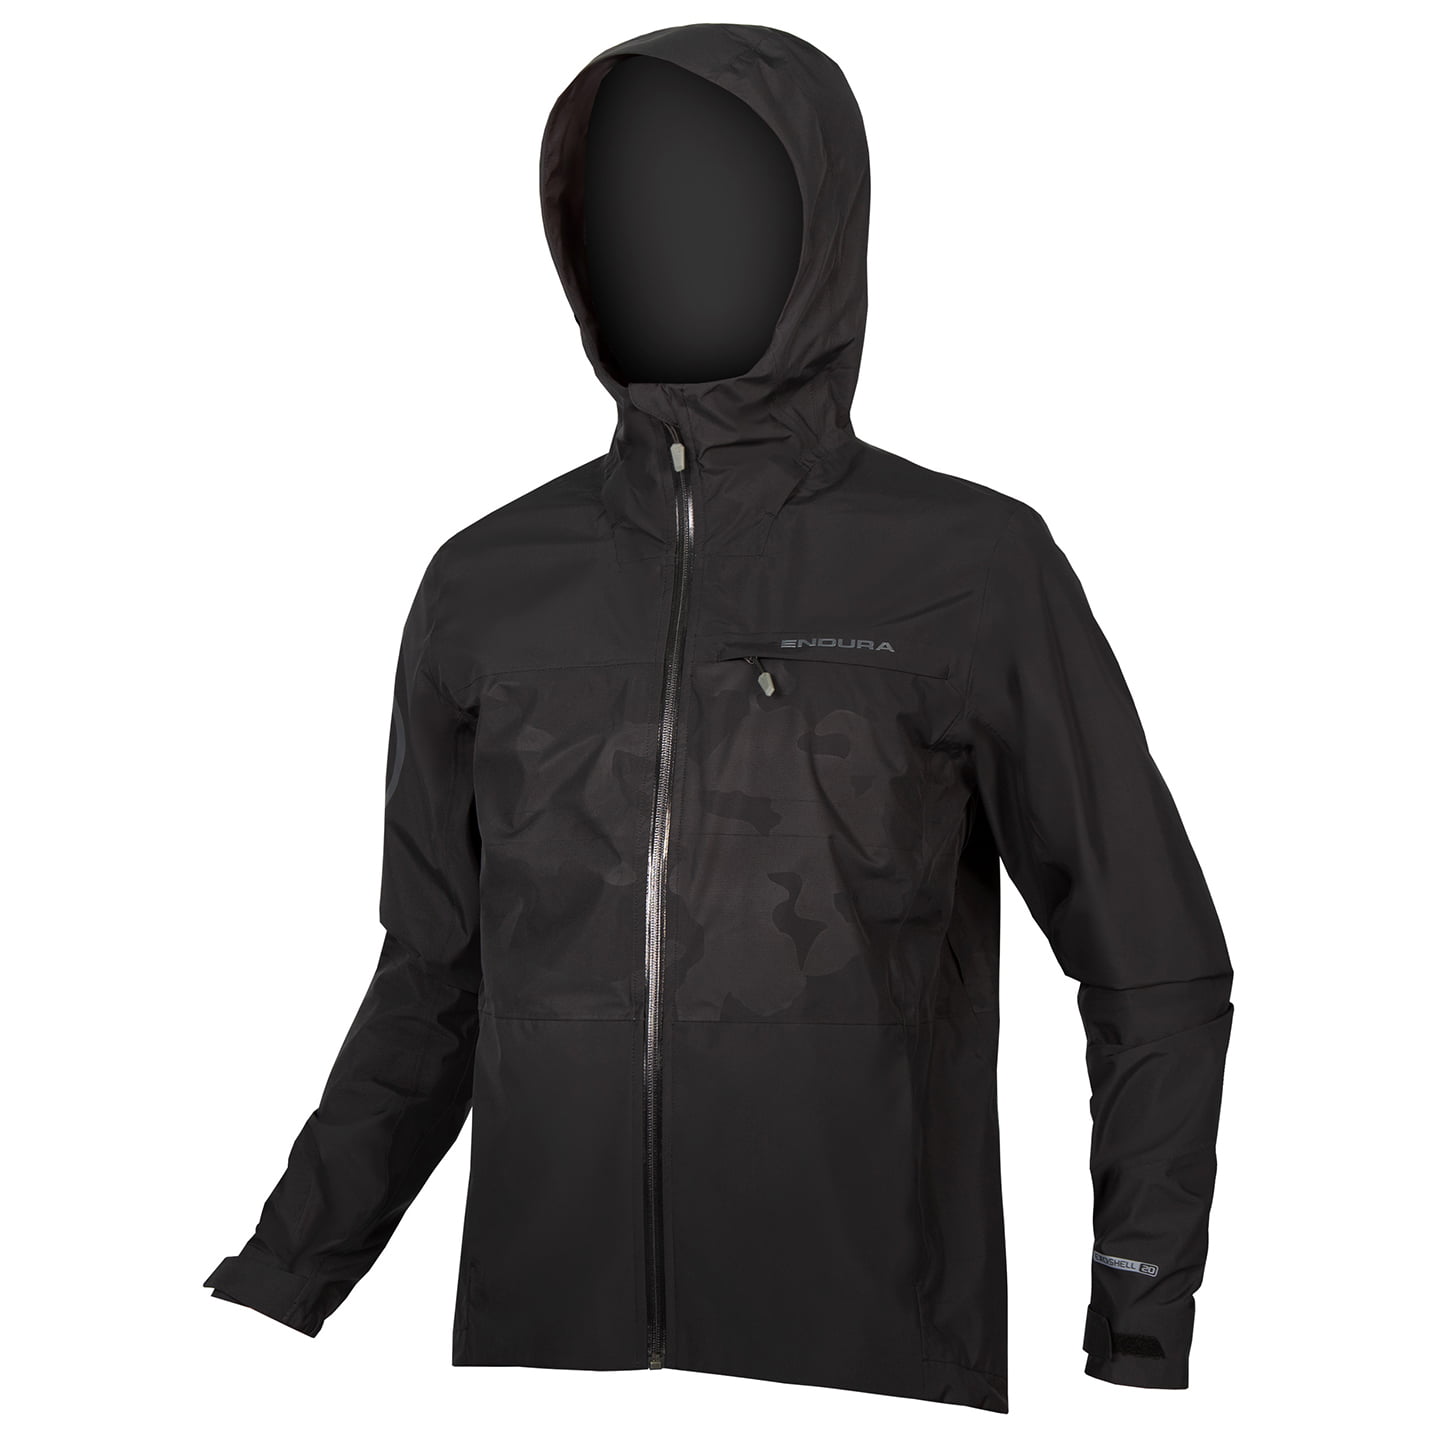 Singletrack II Waterproof Jacket Waterproof Jacket, for men, size 2XL, Cycle jacket, Cycling clothing